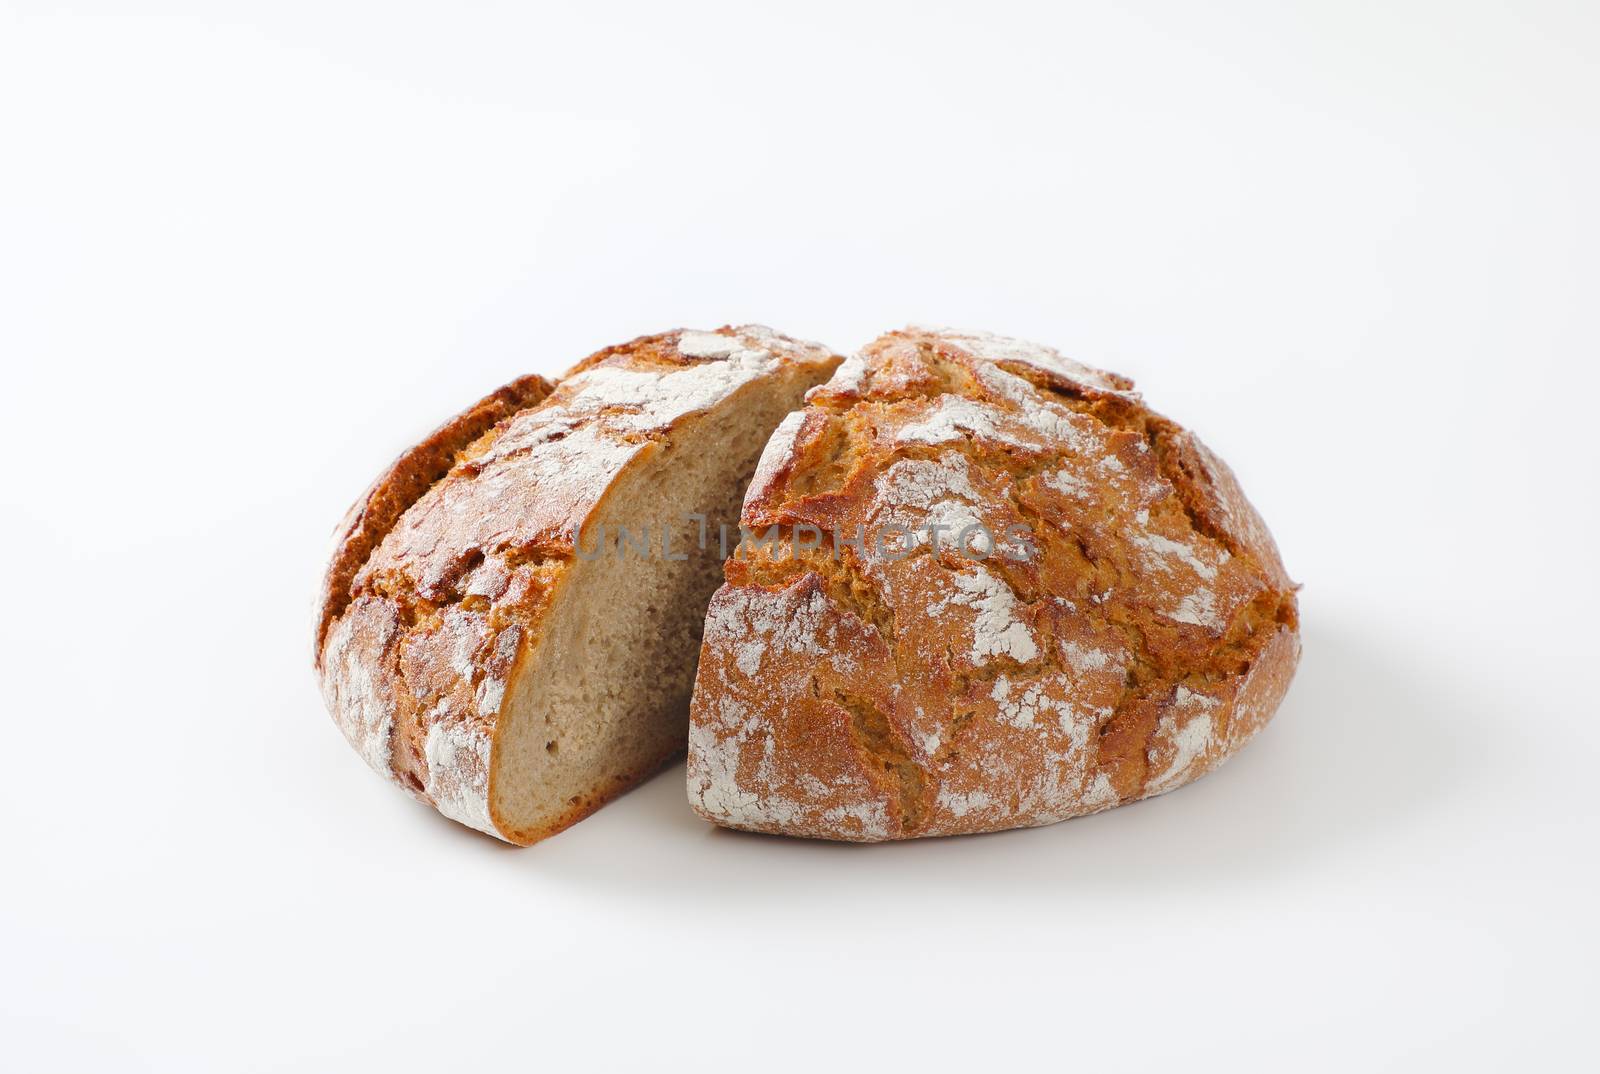 Rustic sourdough bread with crispy crust by Digifoodstock